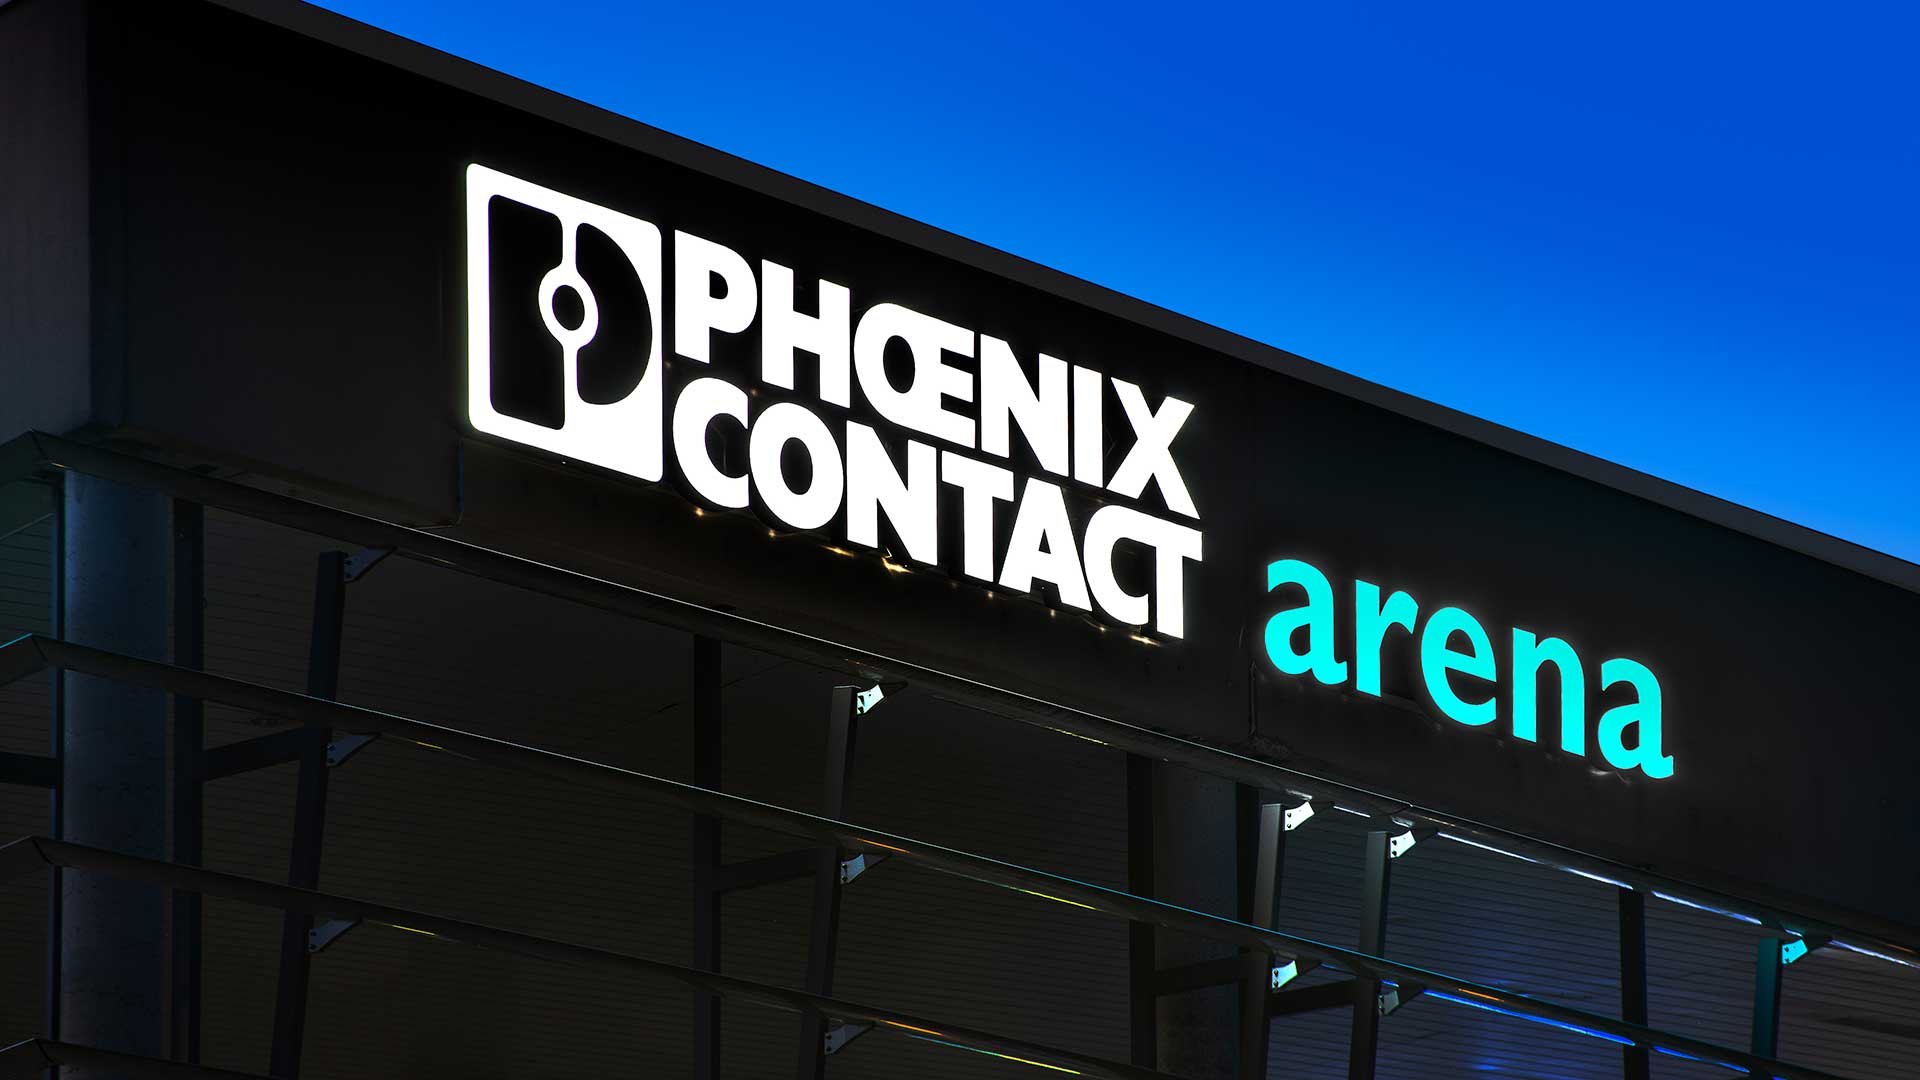 Phoenix Contact Arena